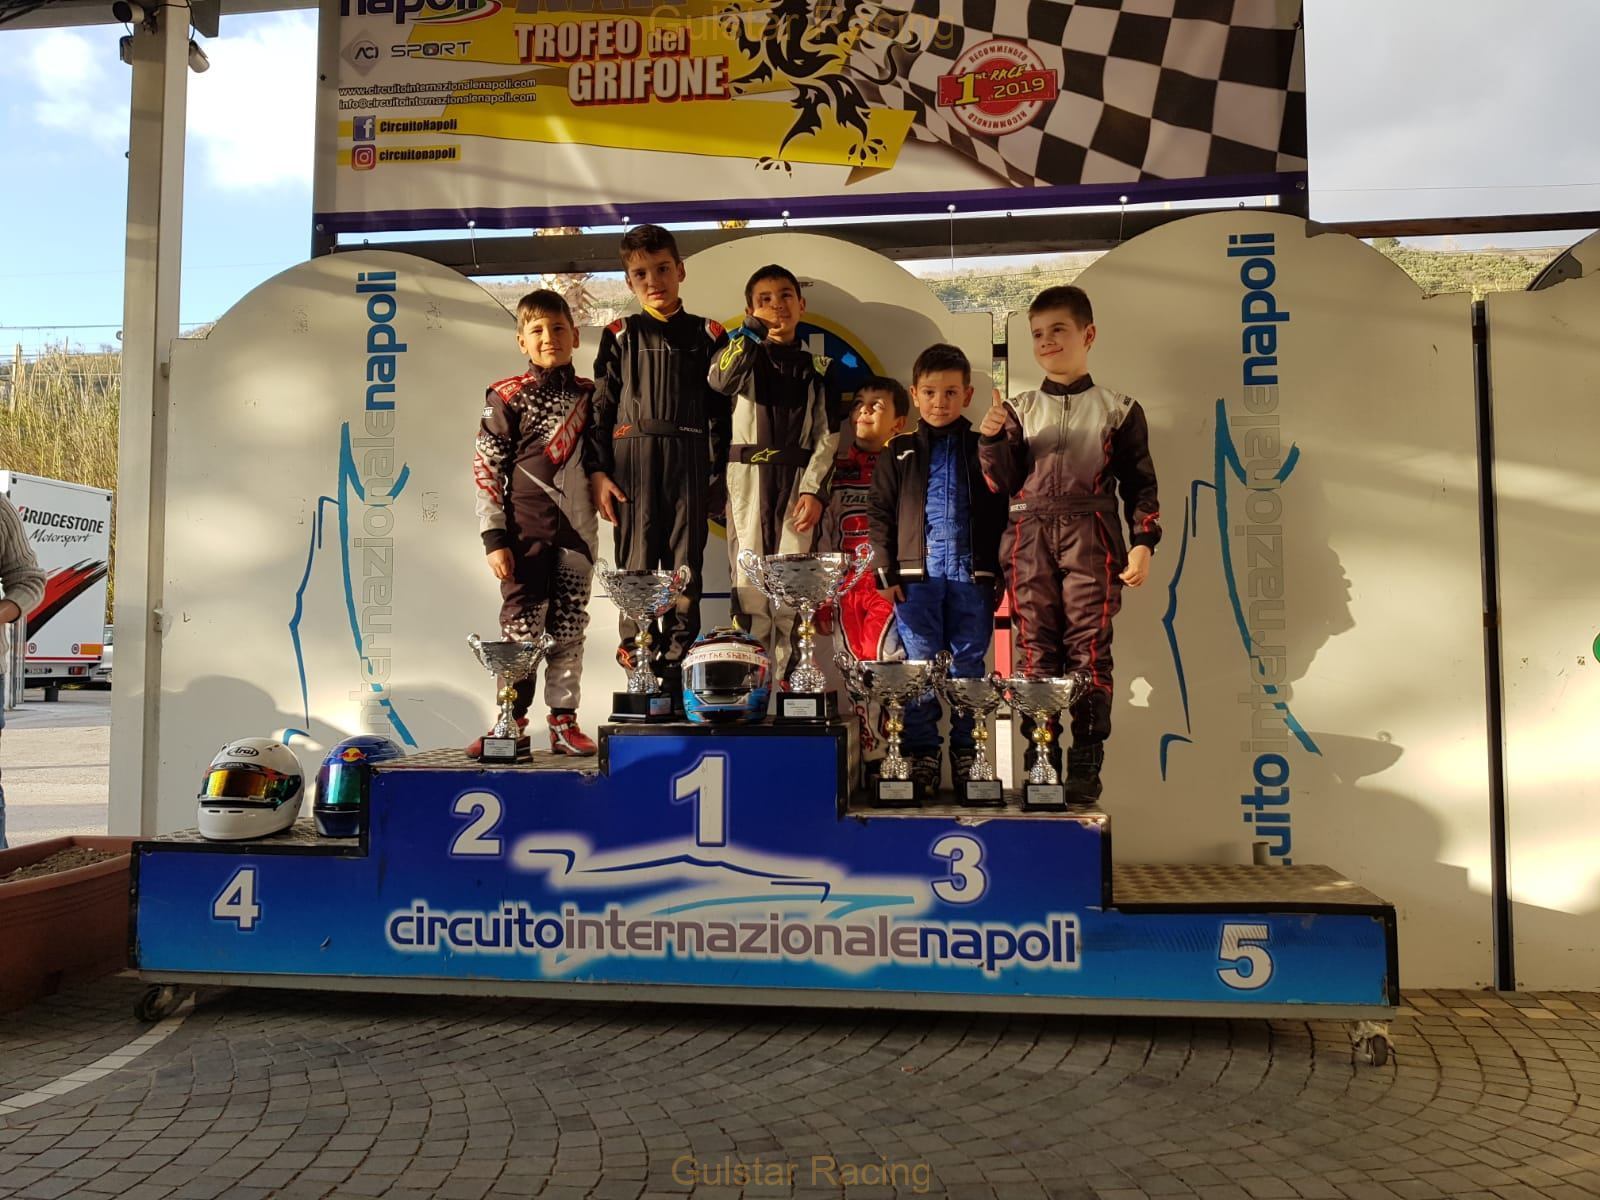 Circuit-Sarno-Trofeo-del-Grifone-2019-06-06-at-11.54.54